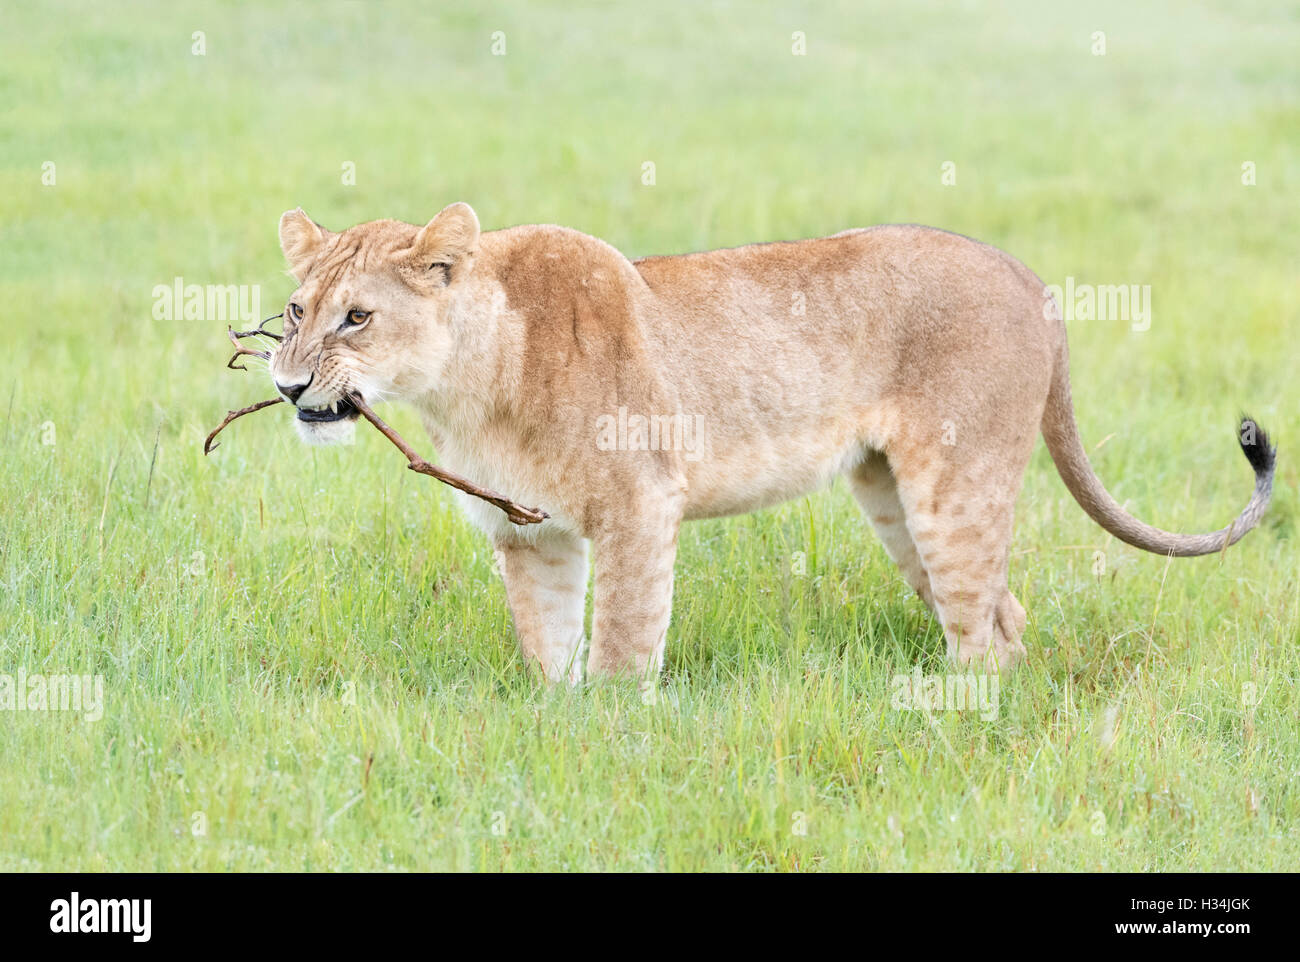 Young lion (Panthera leo) playing with a stick, Maasai Mara national reserve, Kenya Stock Photo